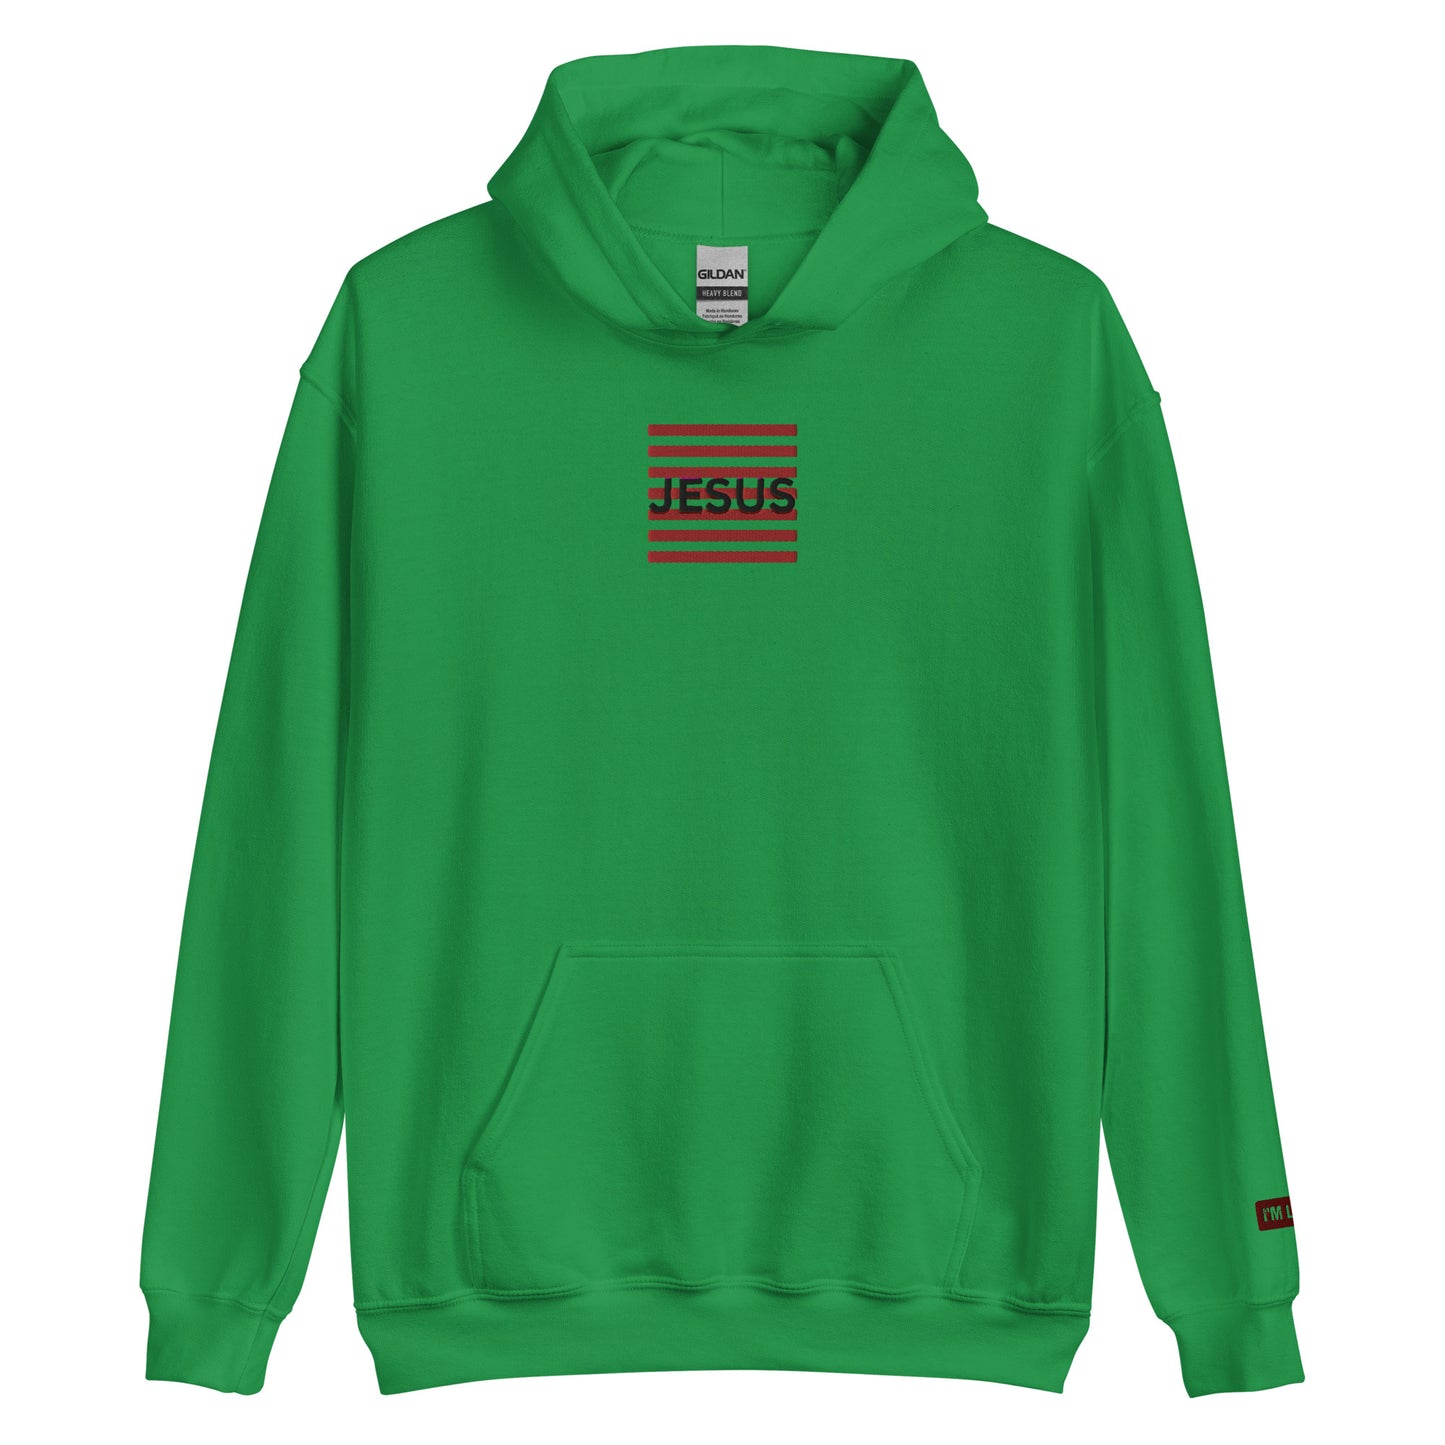 Jesus Embroidery Unisex Hoodie - Irish Green / S